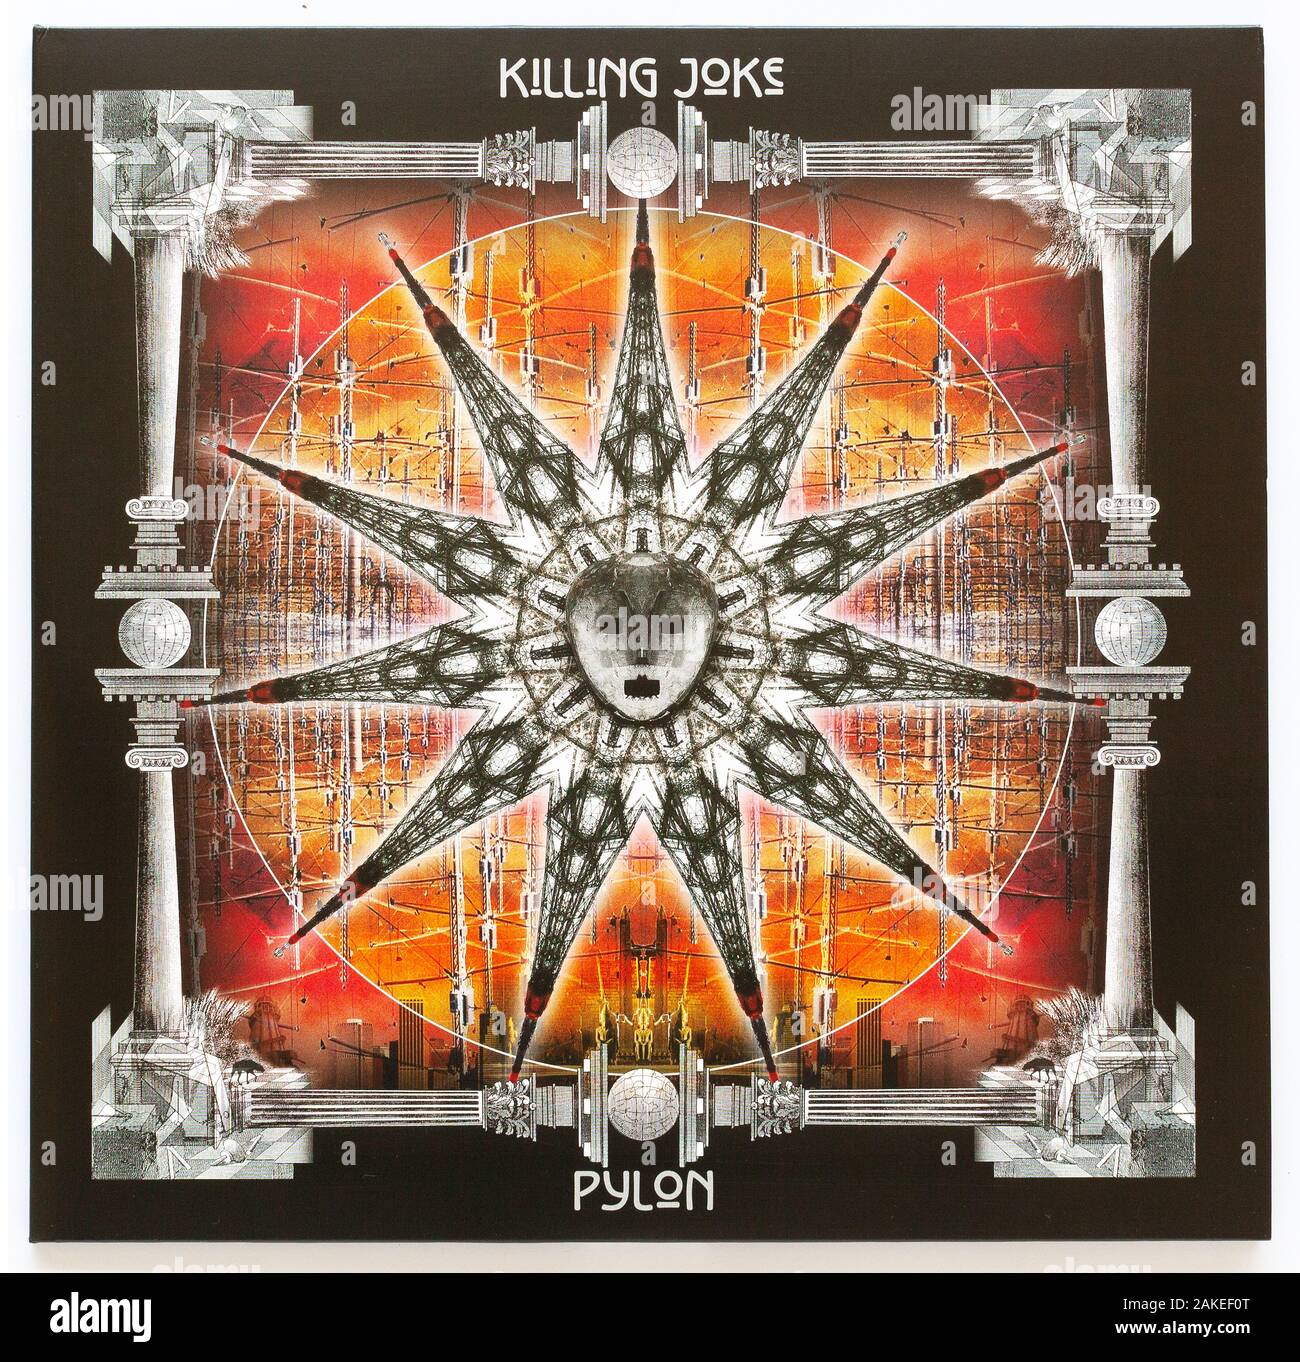 The cover of Pylon,  2015 album by Killing Joke on Spinefarm - Editorial use only Stock Photo